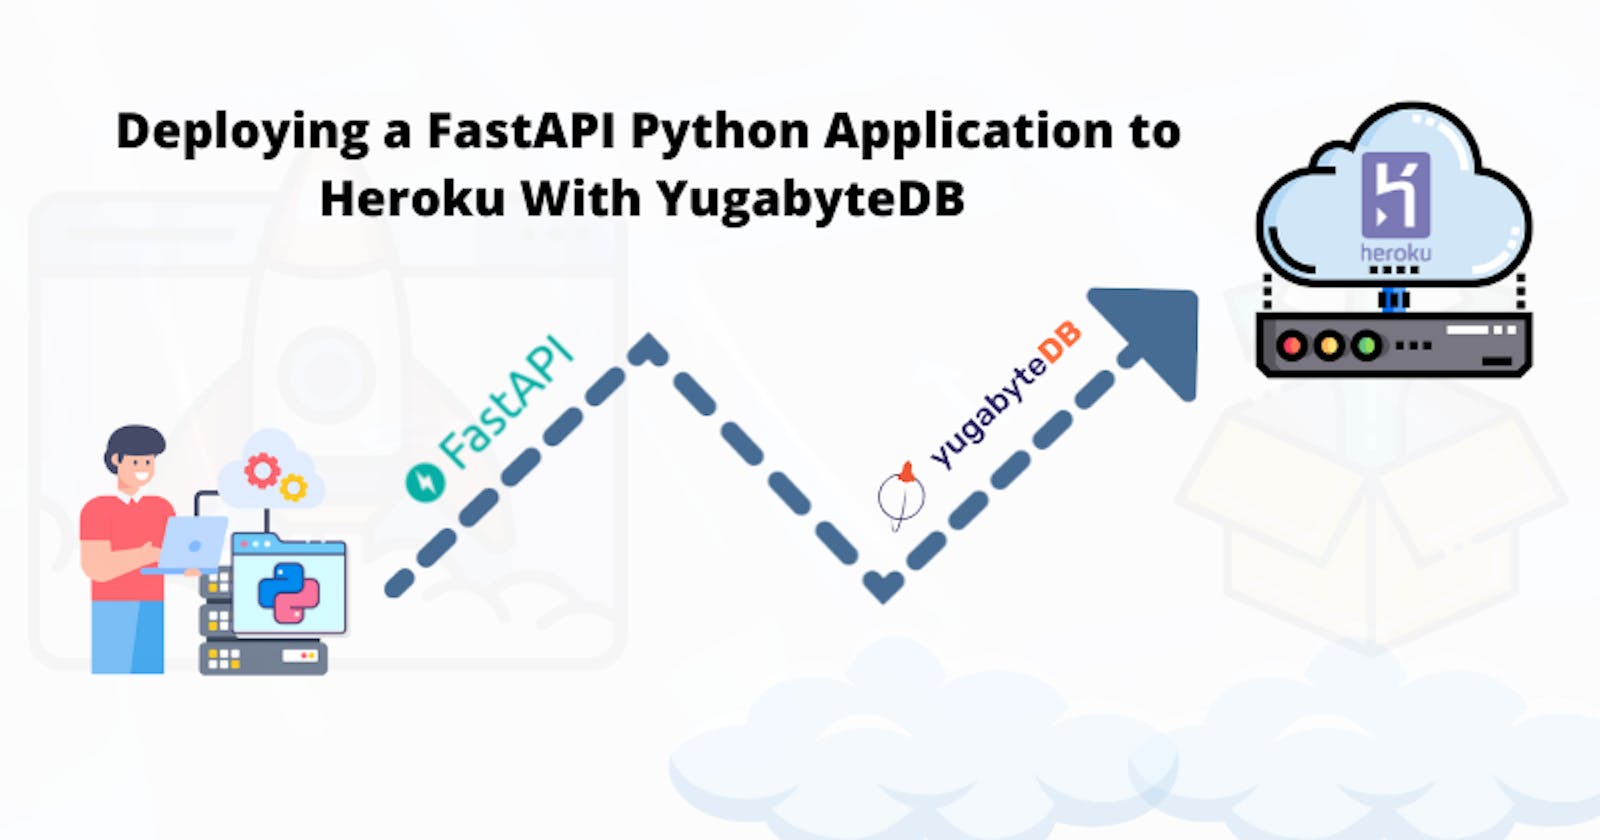 Deploying FastAPI Python Application with YugabyteDB to Heroku